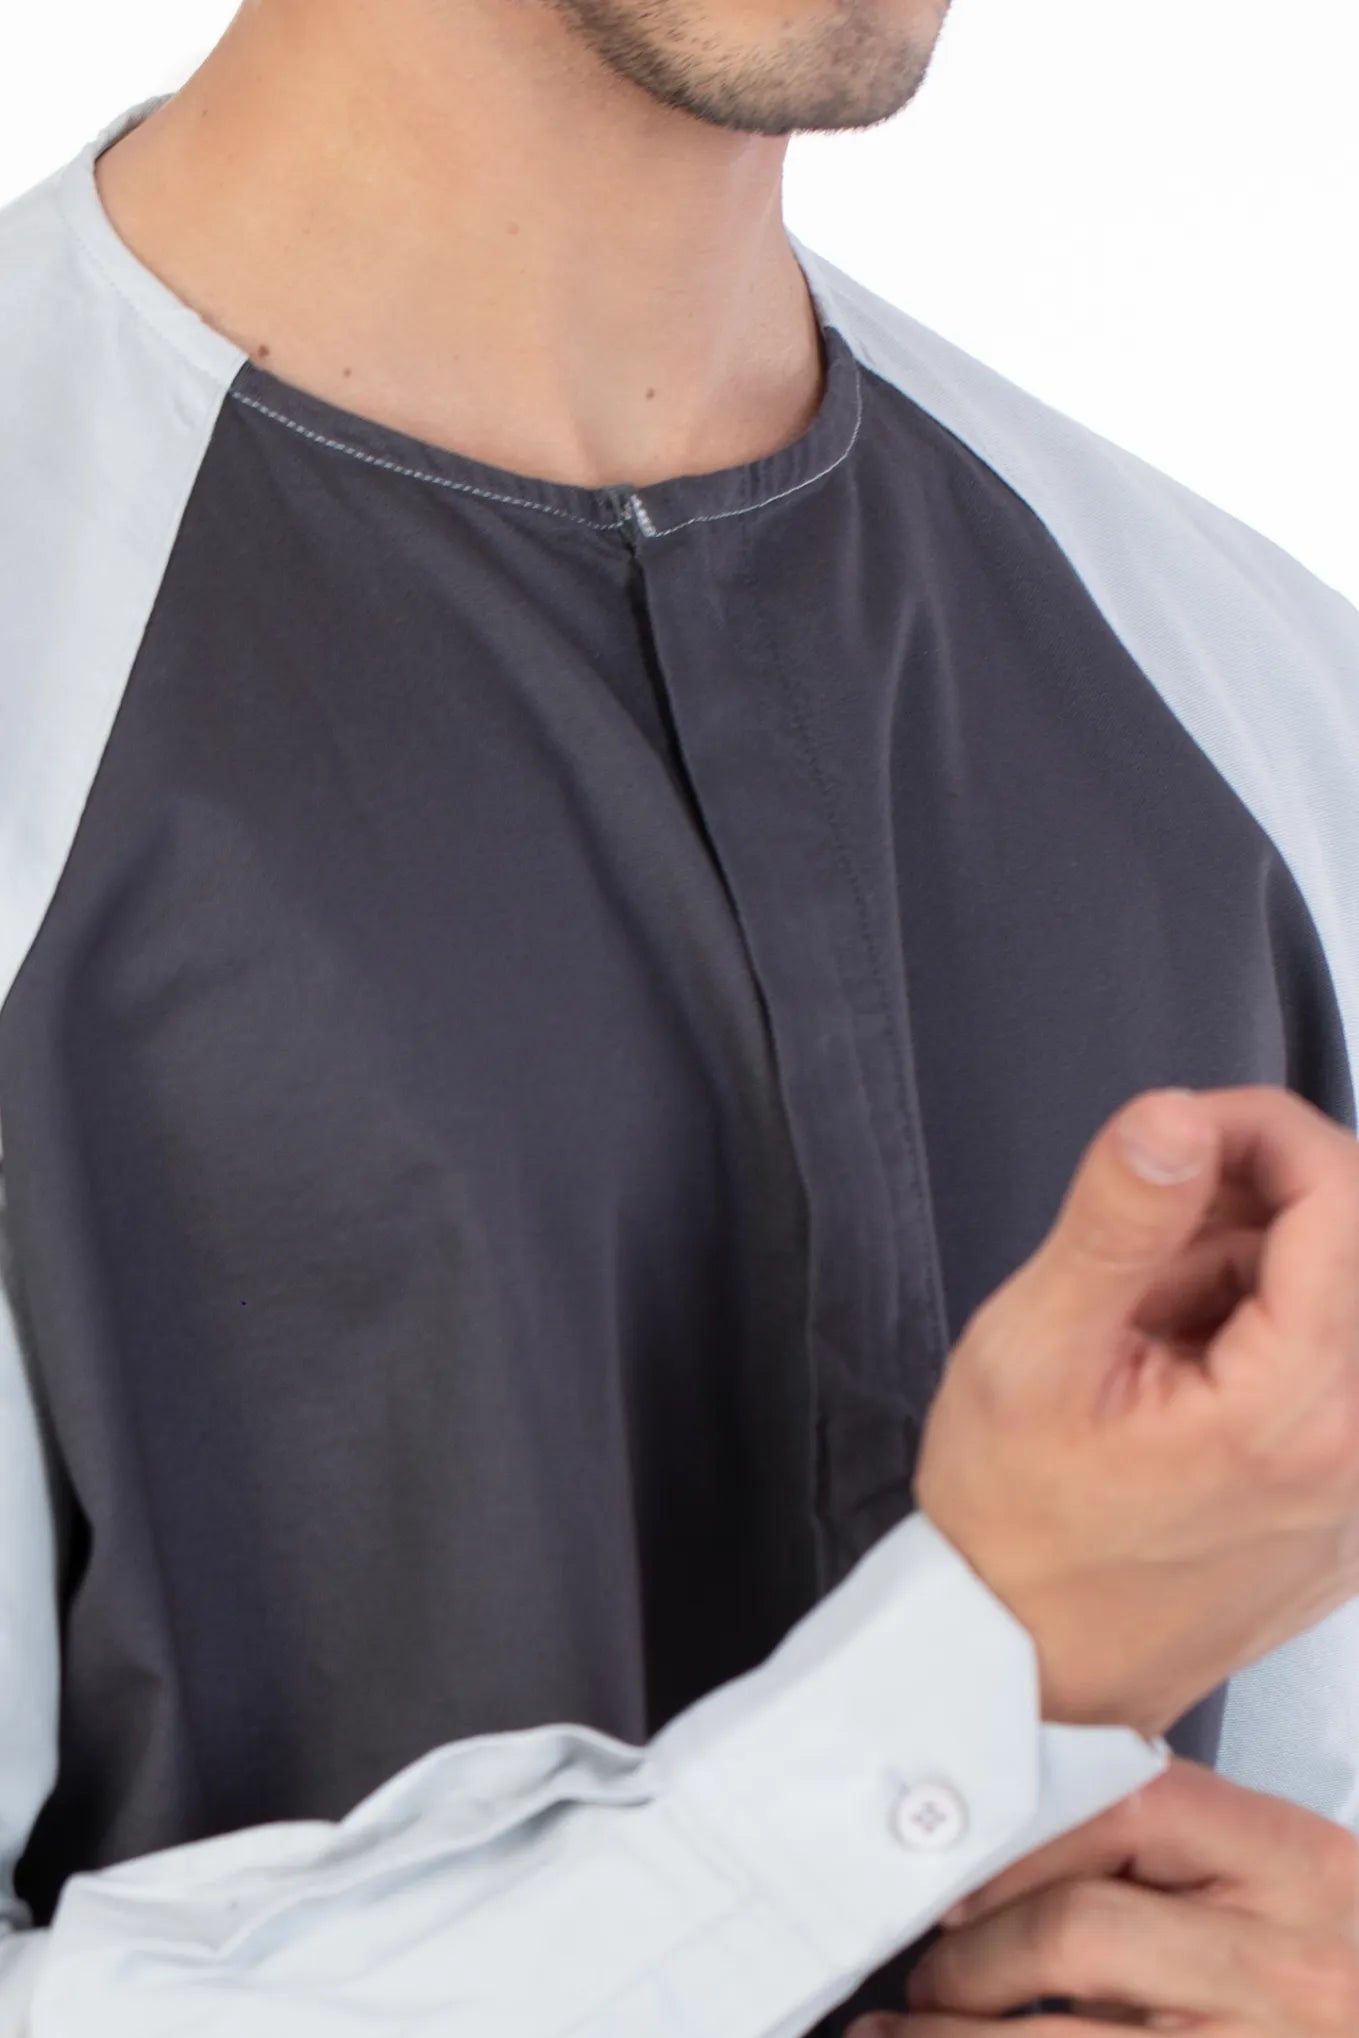 Buy Round Neck Raglan Sleeve Shirt Online.